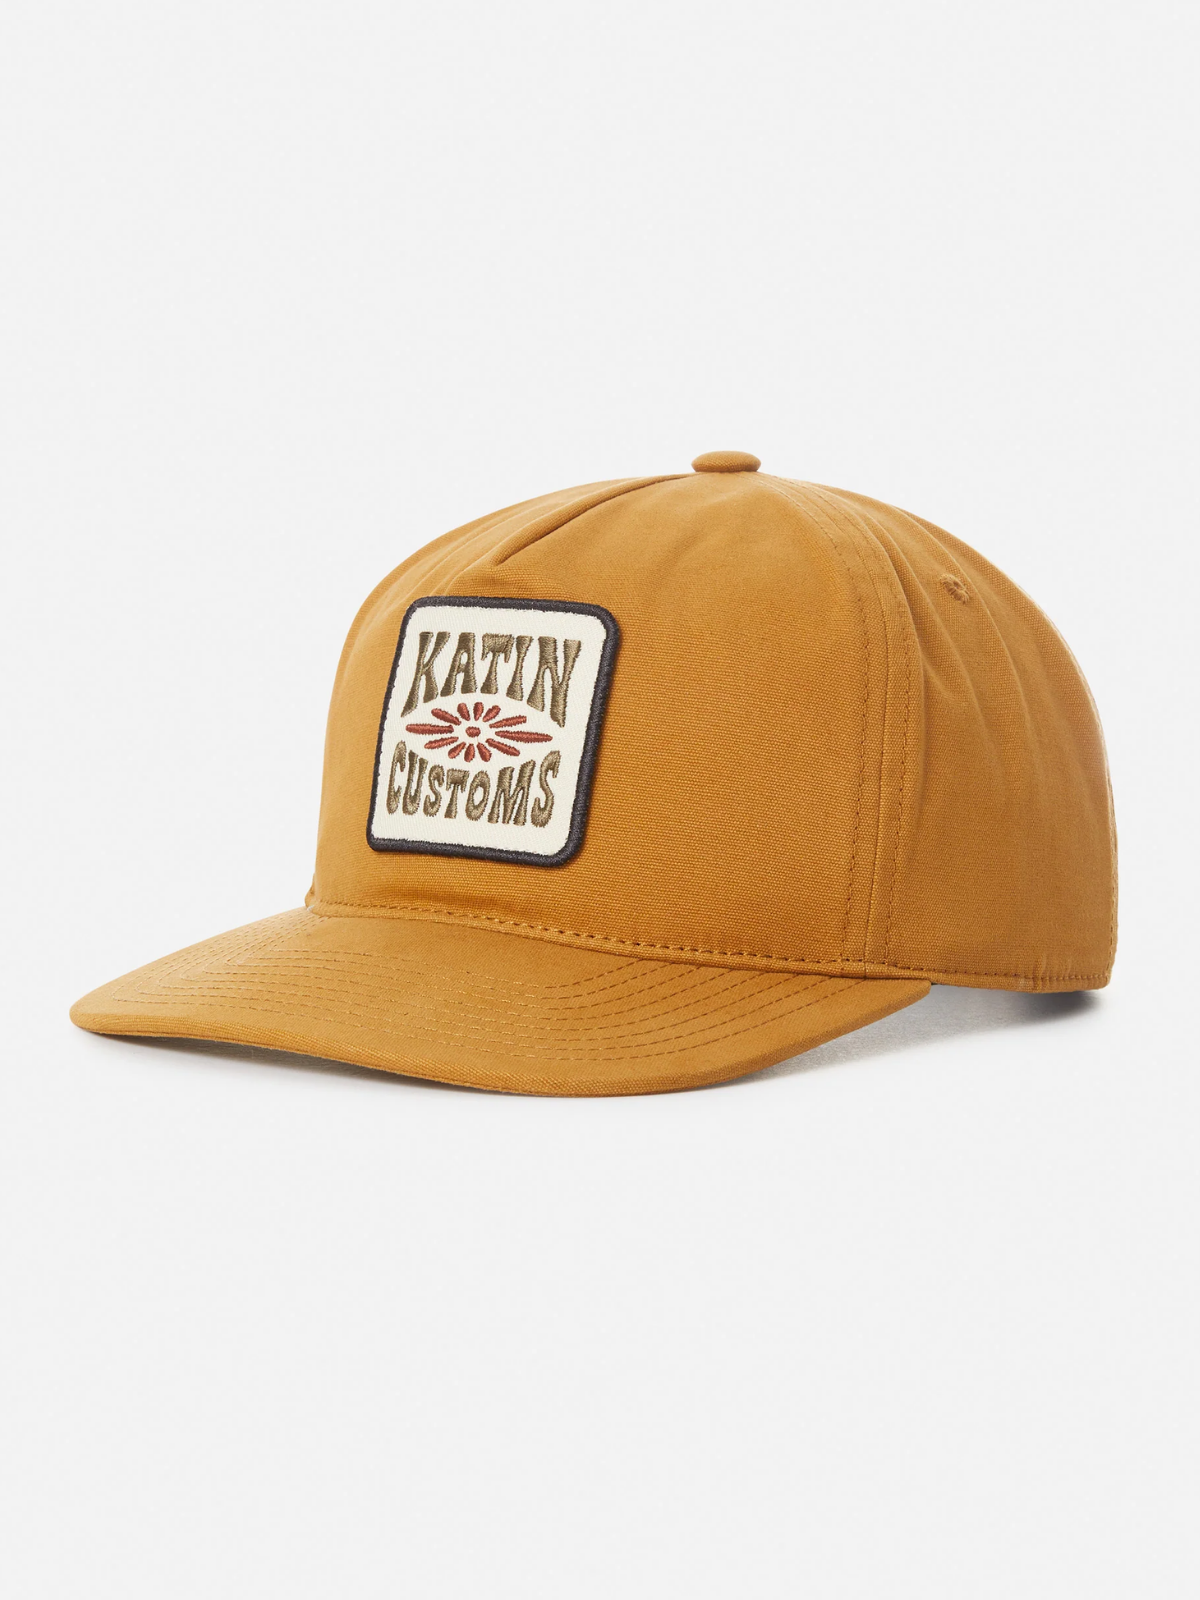 katin concho hat nutmeg gold orange yellow embroidered patch snapback cap kempt athens ga georgia men's clothing store